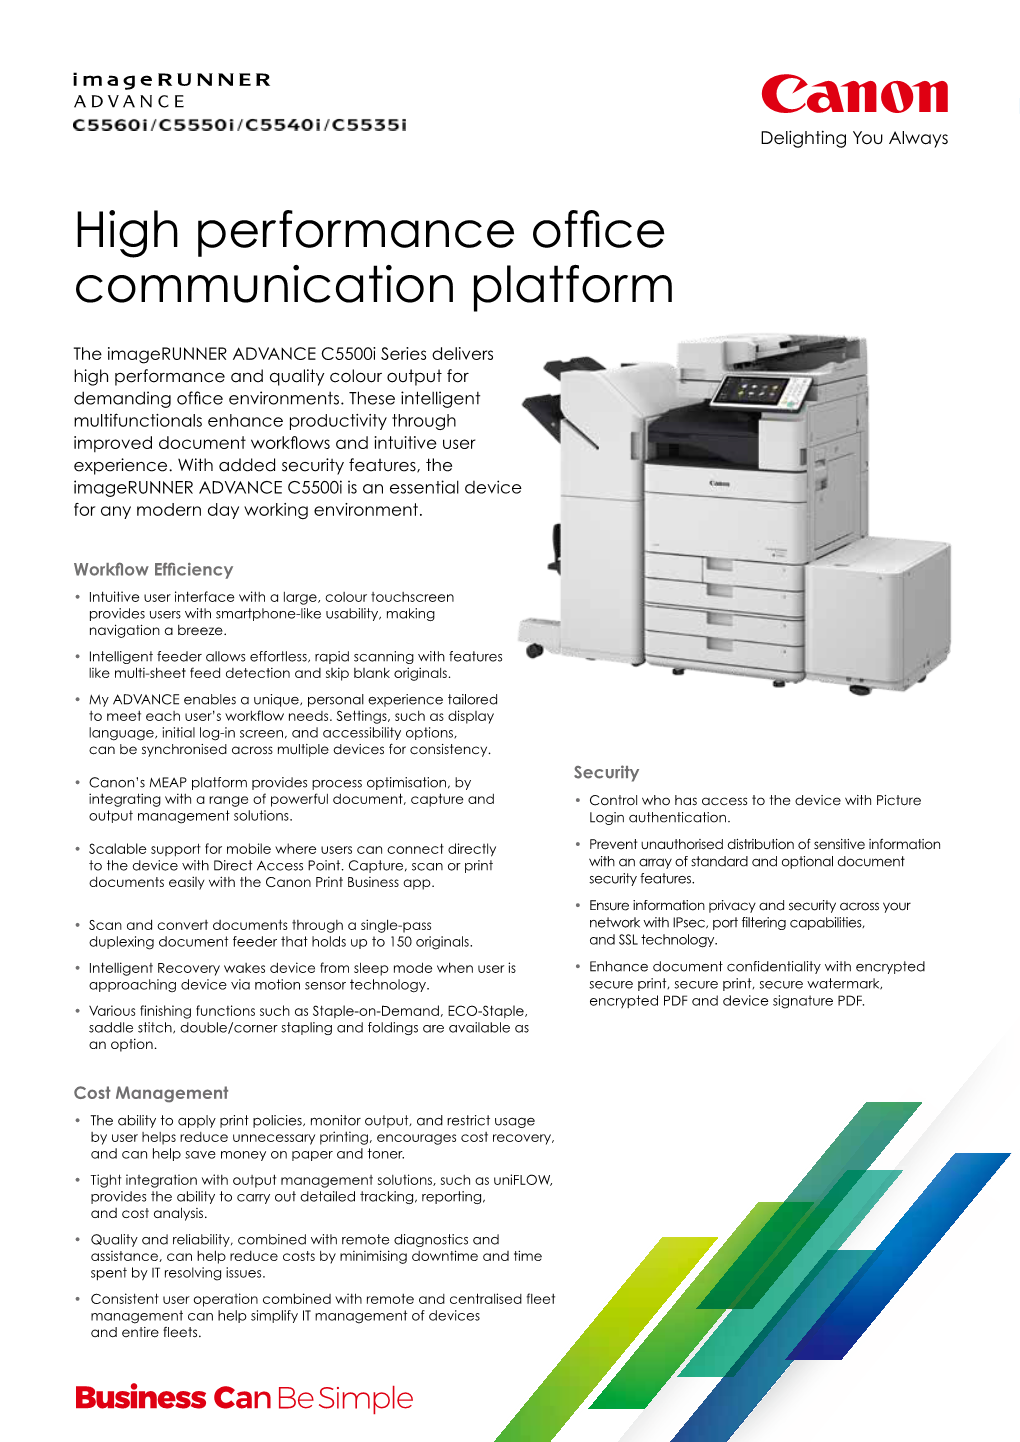 High Performance Office Communication Platform